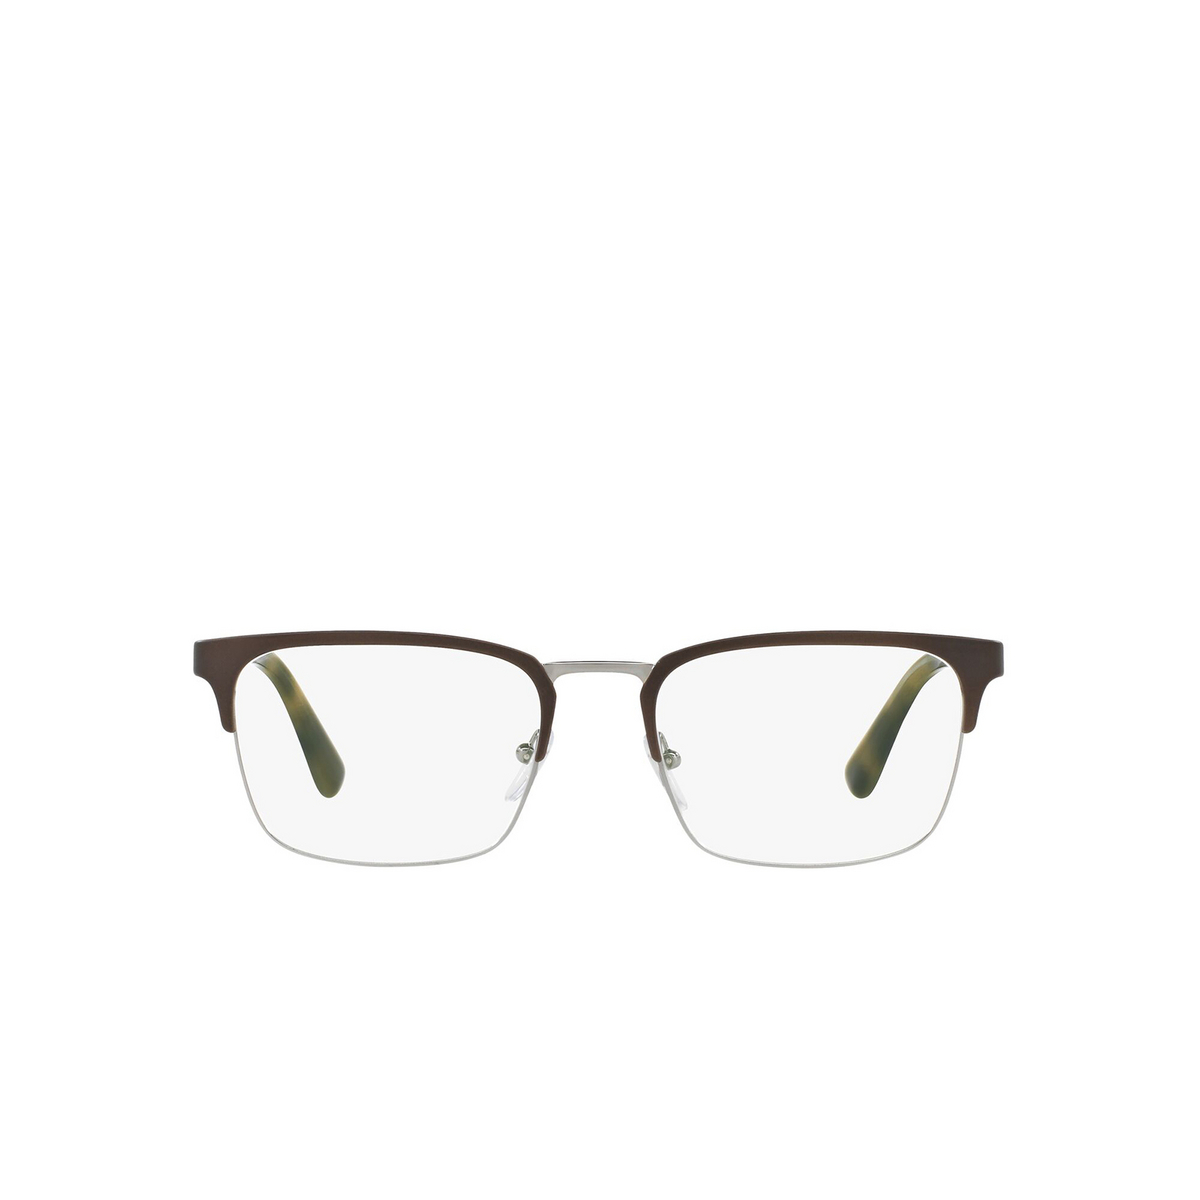 Prada® Rectangle Eyeglasses: Heritage PR 54TV color Grey / Gunmetal U6C1O1 - front view.